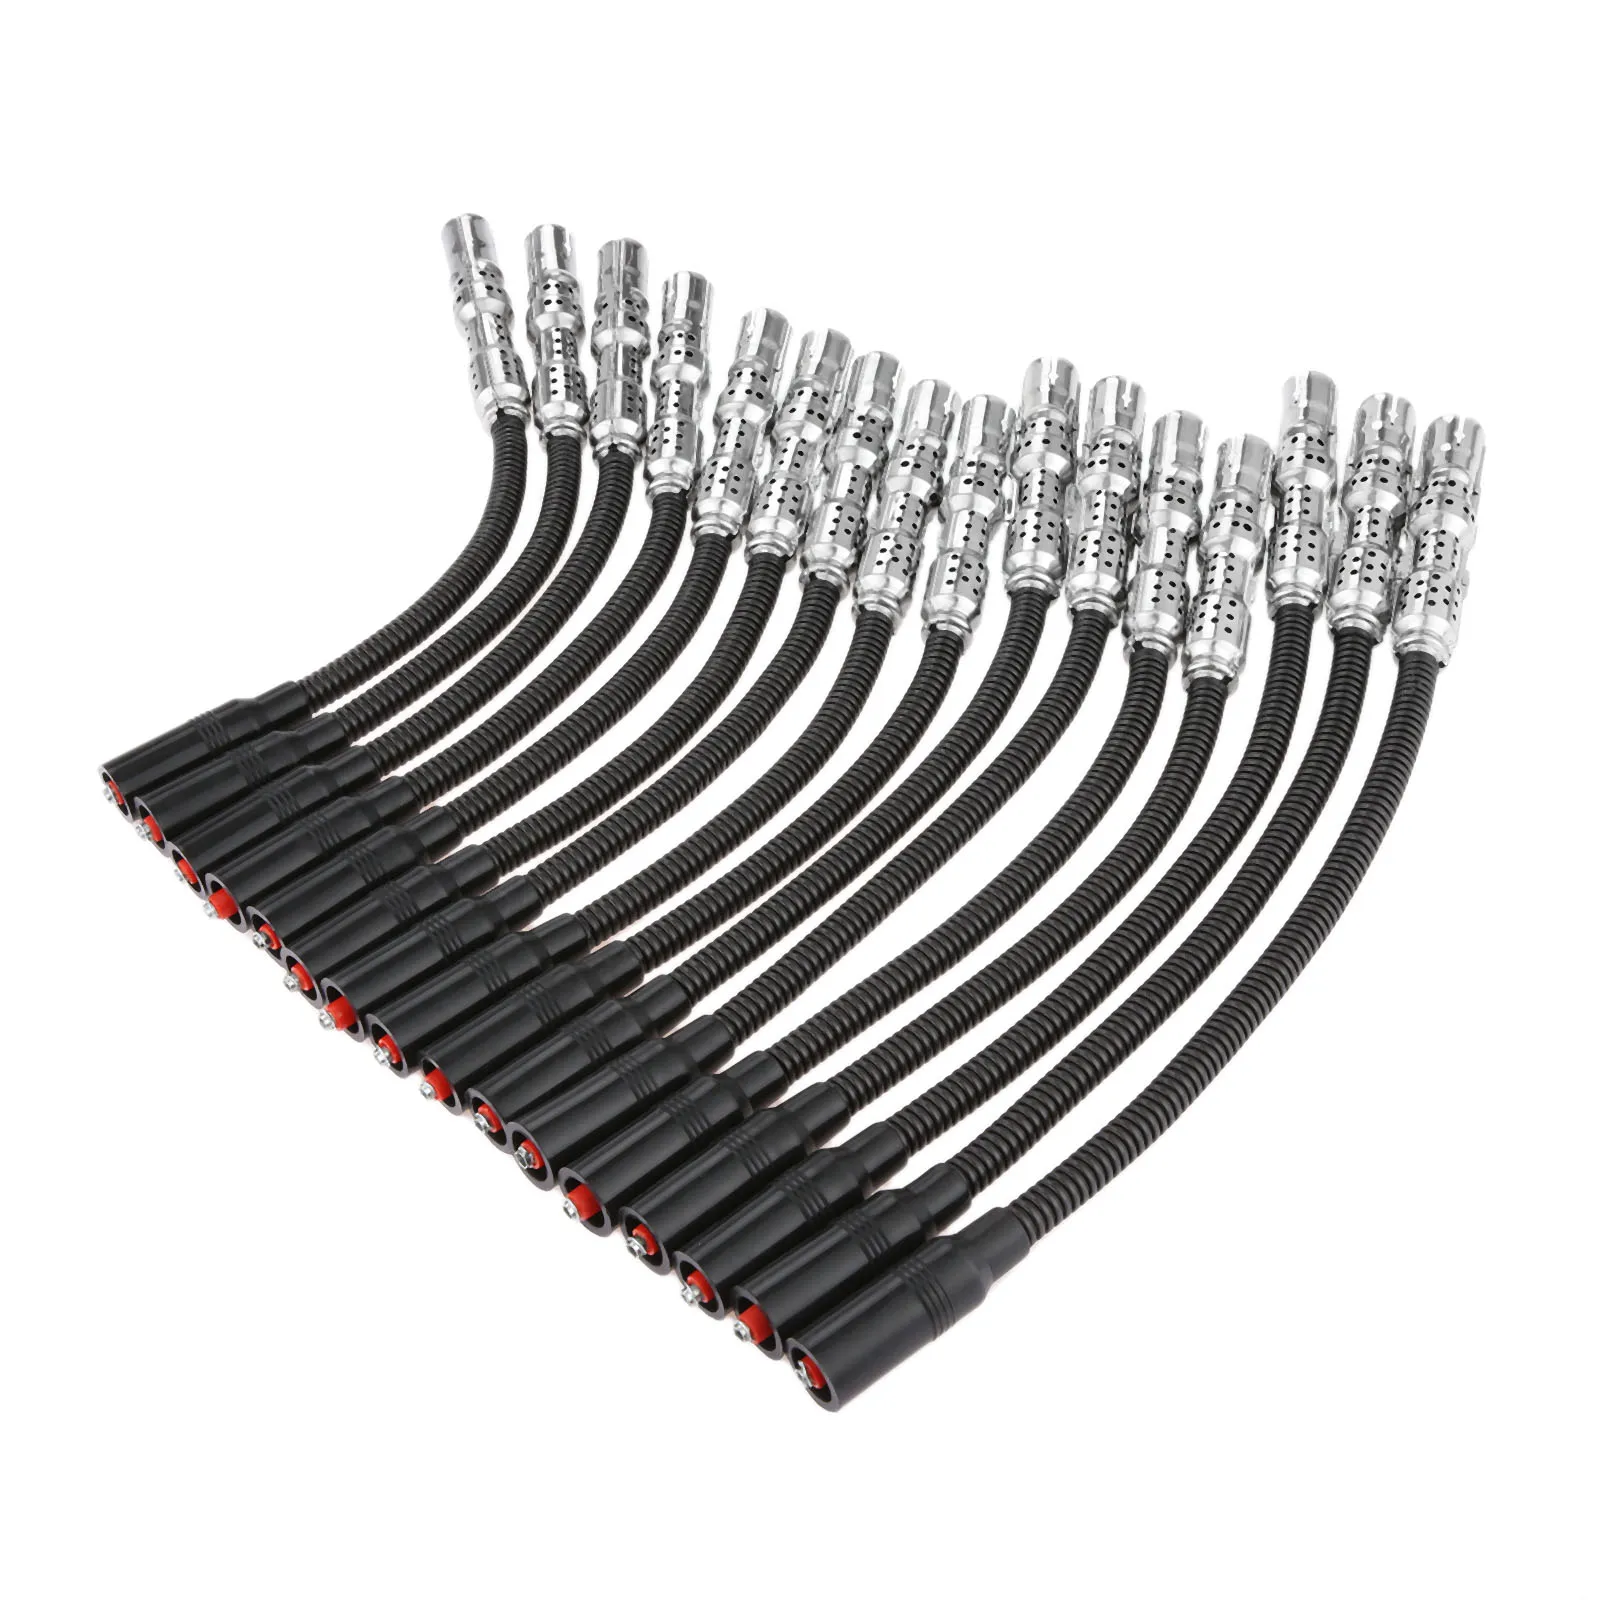 Yetaha 16Pcs 8mm Spark Plug Wires Ignition Cable Kit 1131500019 For Mercedes-Benz C-Class E-Class ML500 R50 E430 E500 E55